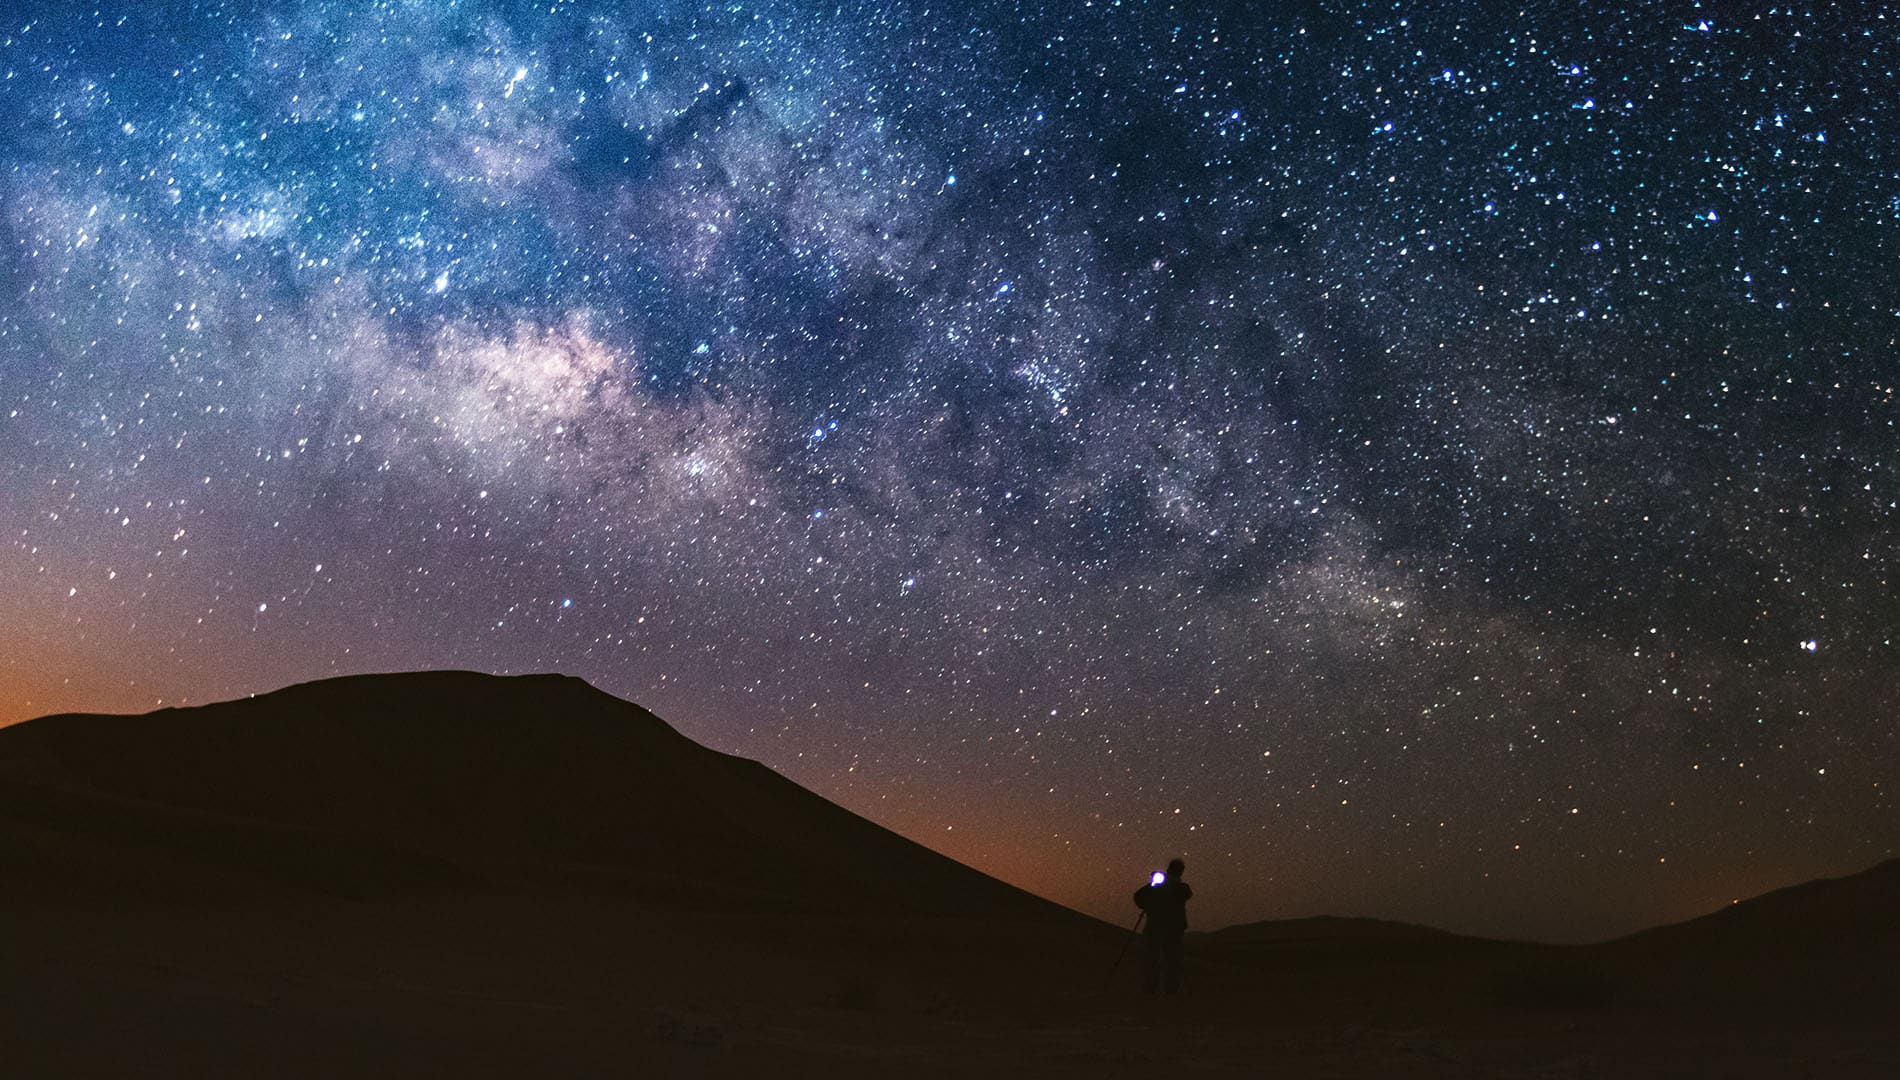 The Desert night sky in Oman